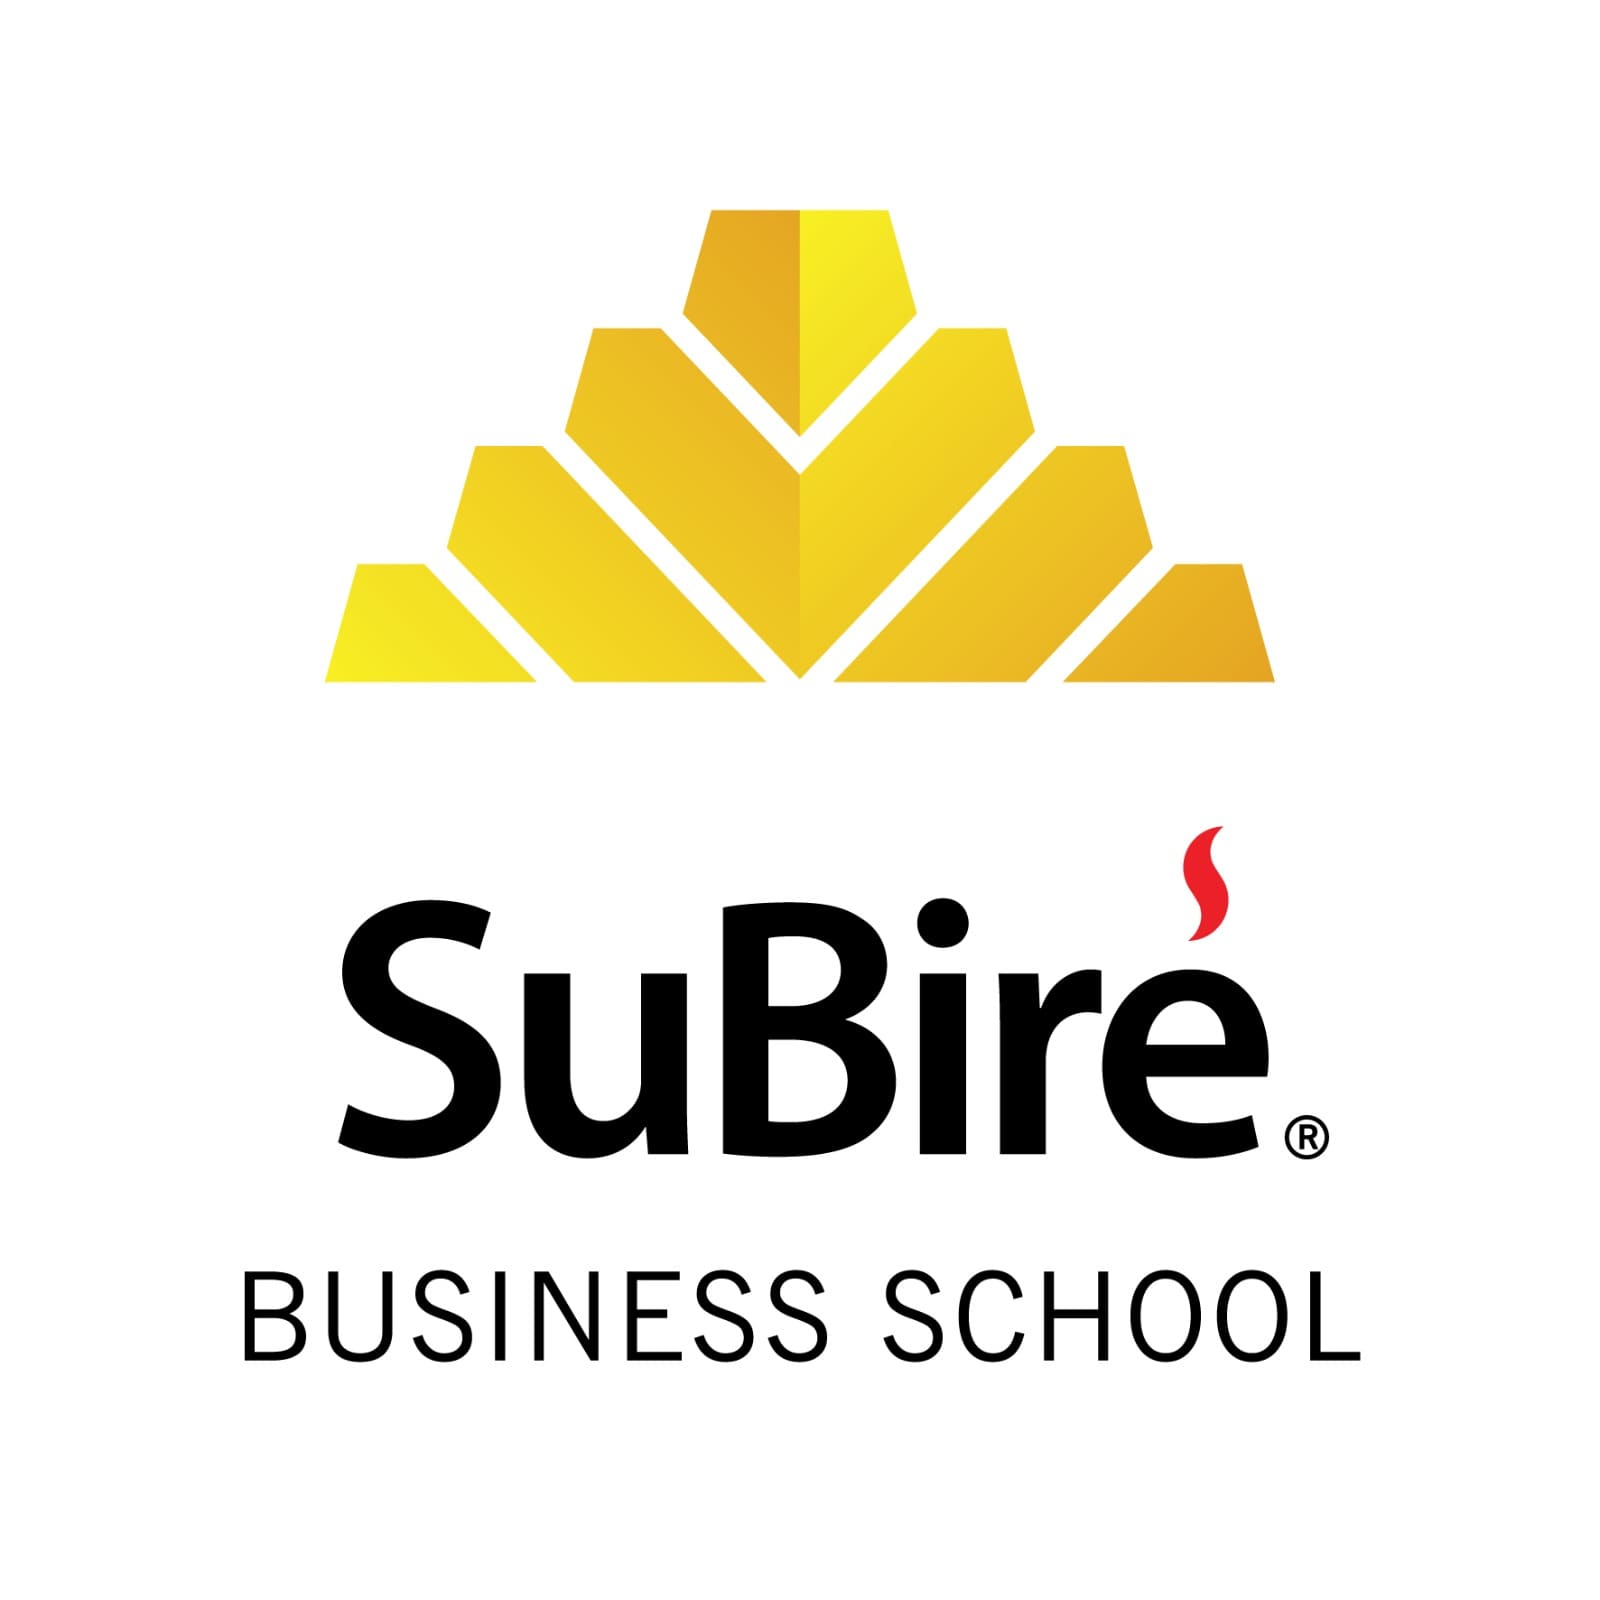 subire business school leon logo